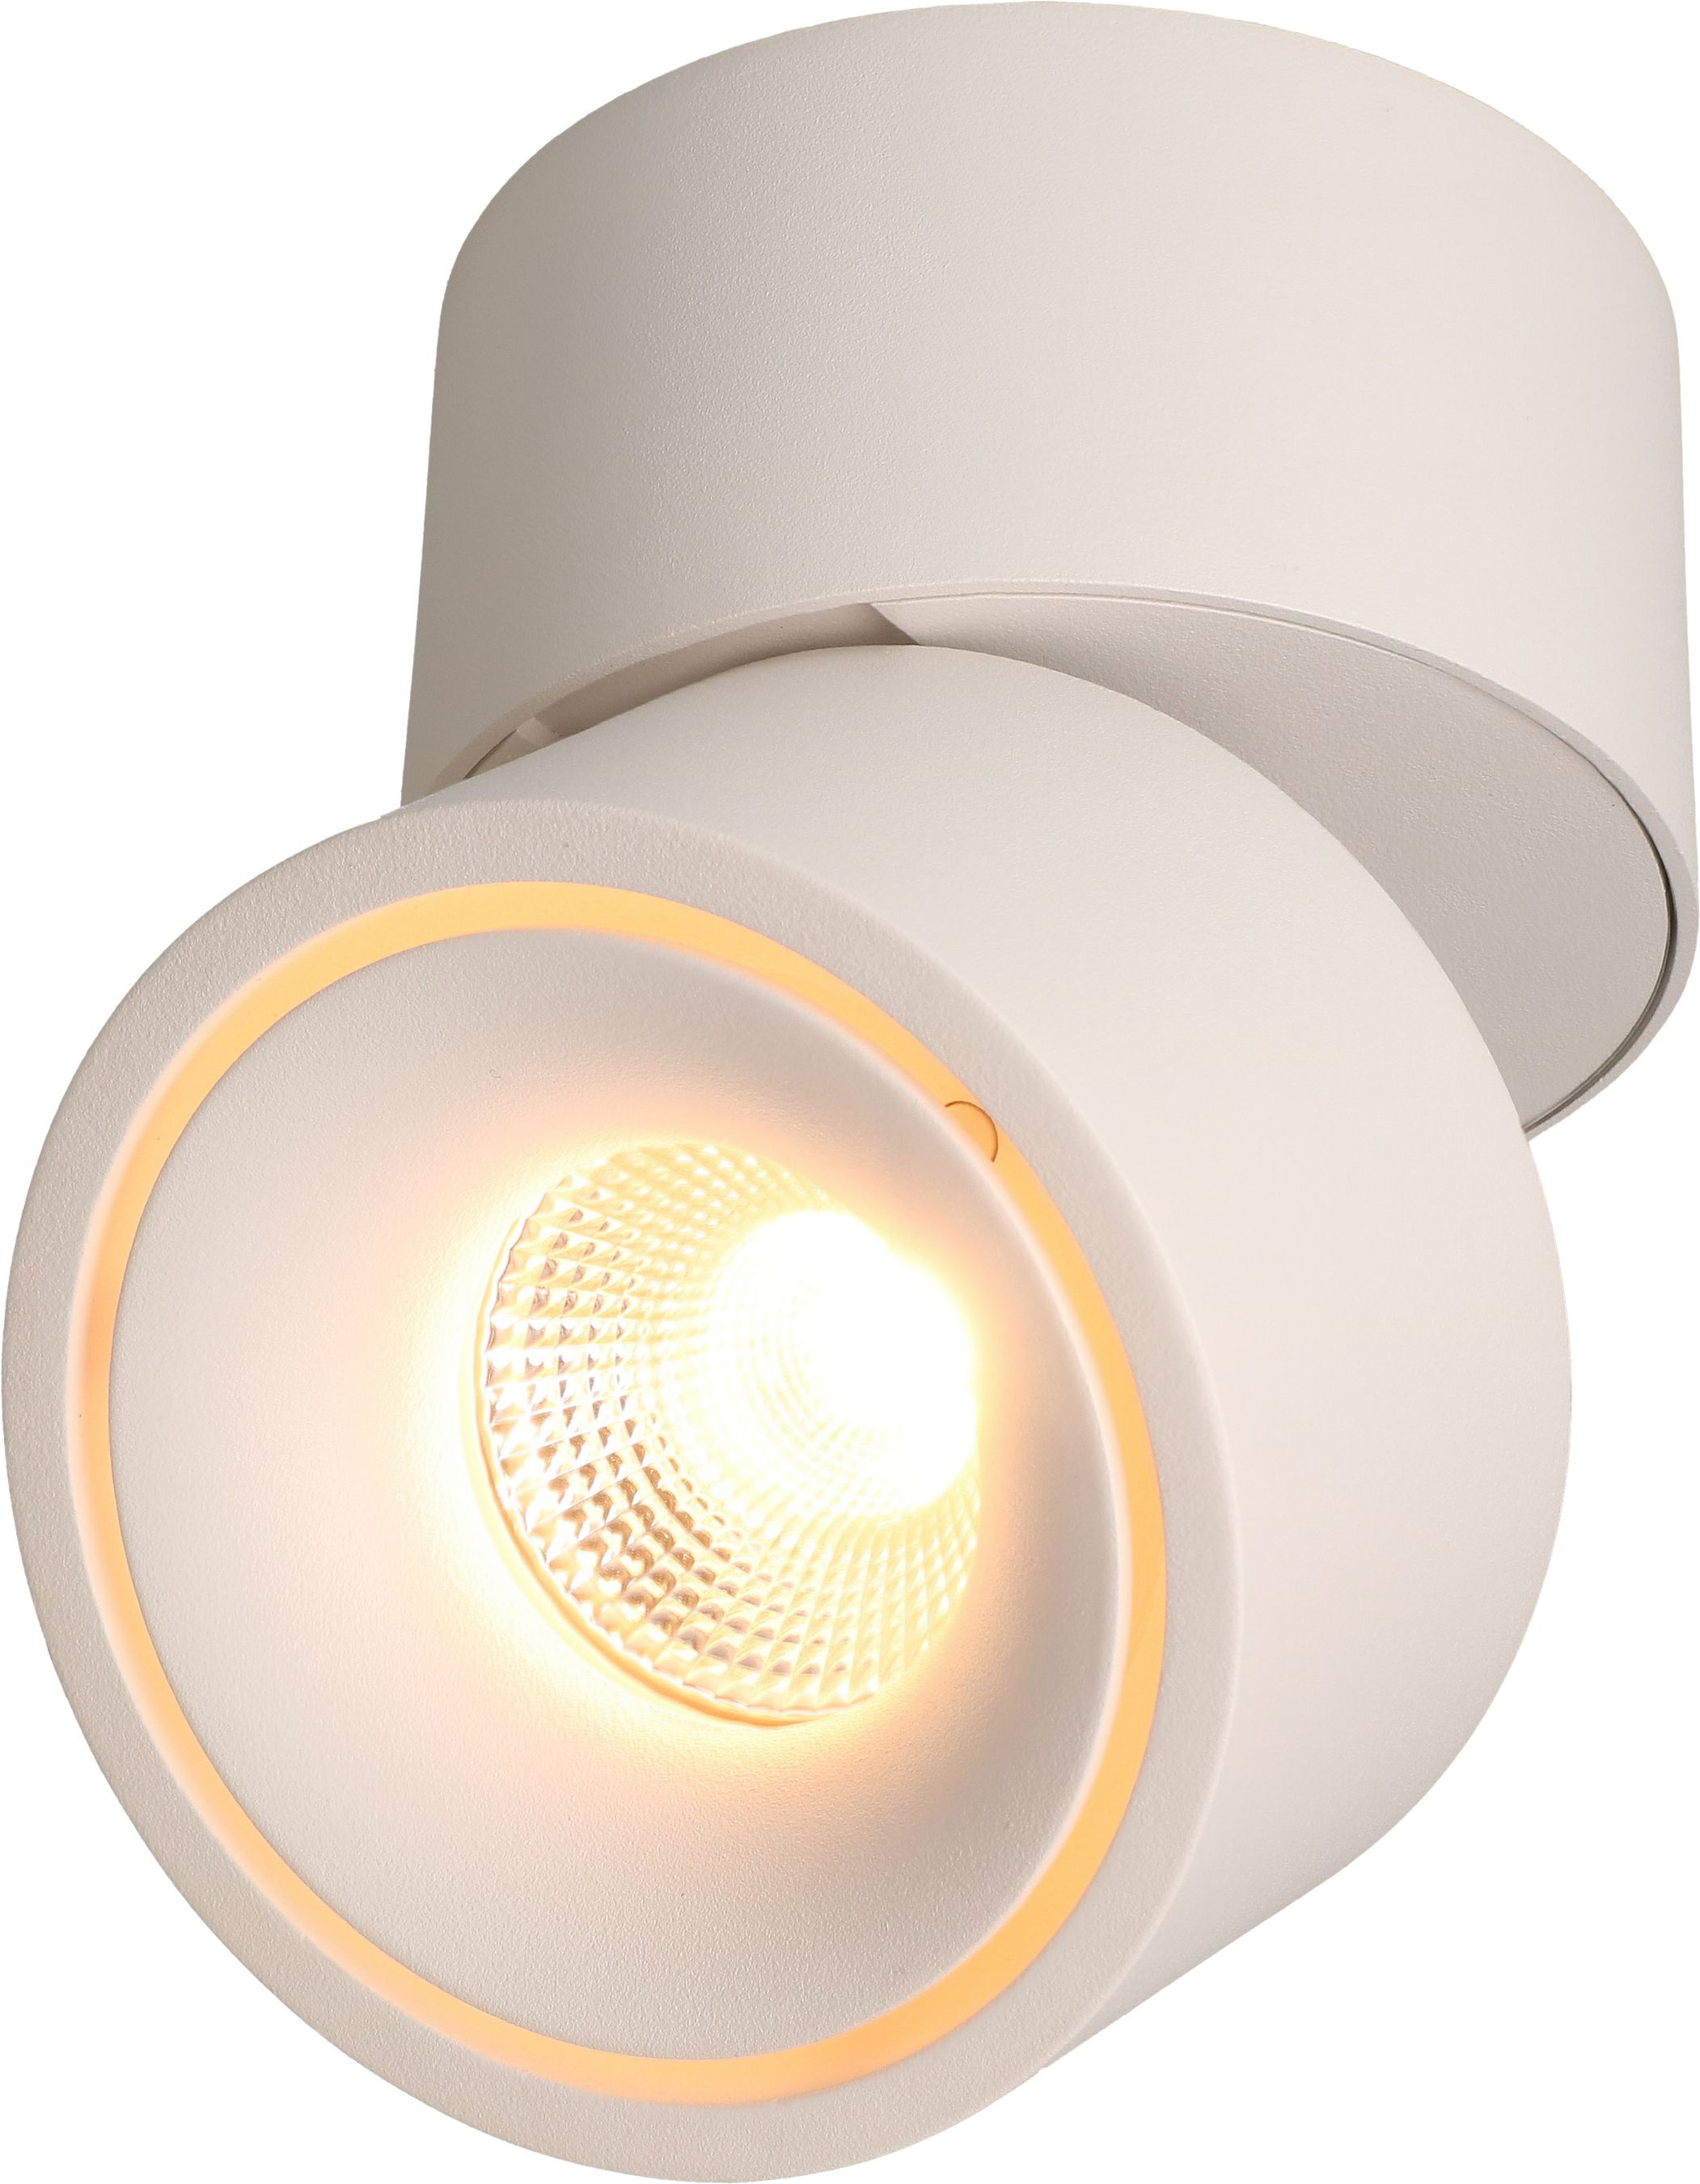 LED plafonnier BIG SHINE blanc mat 3000K 1100lm 36°